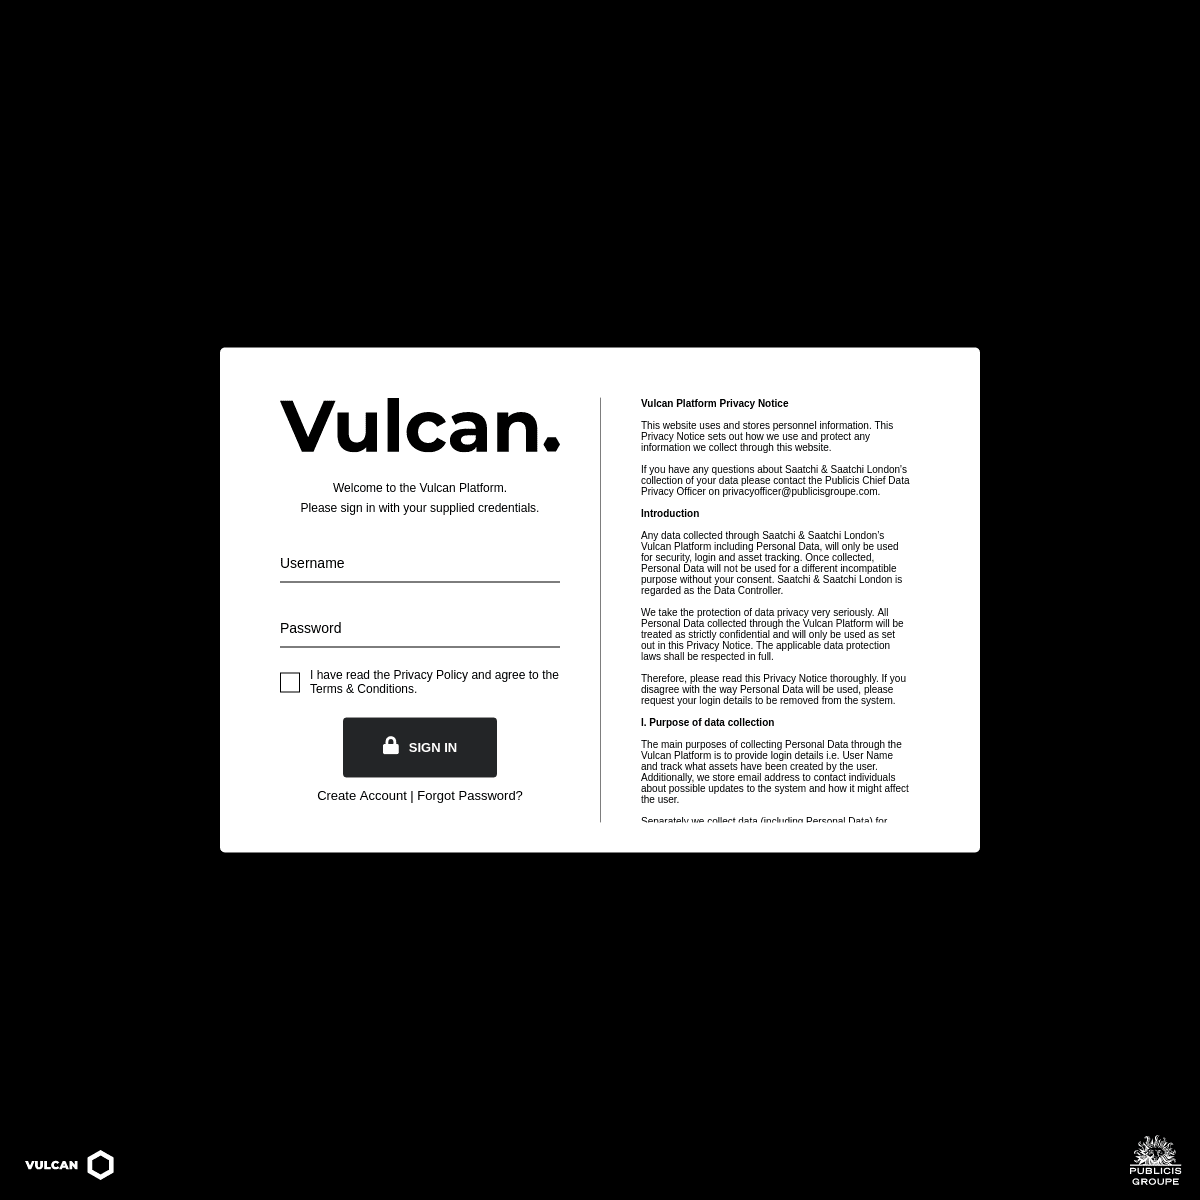 A complete backup of vulcanplatform.net